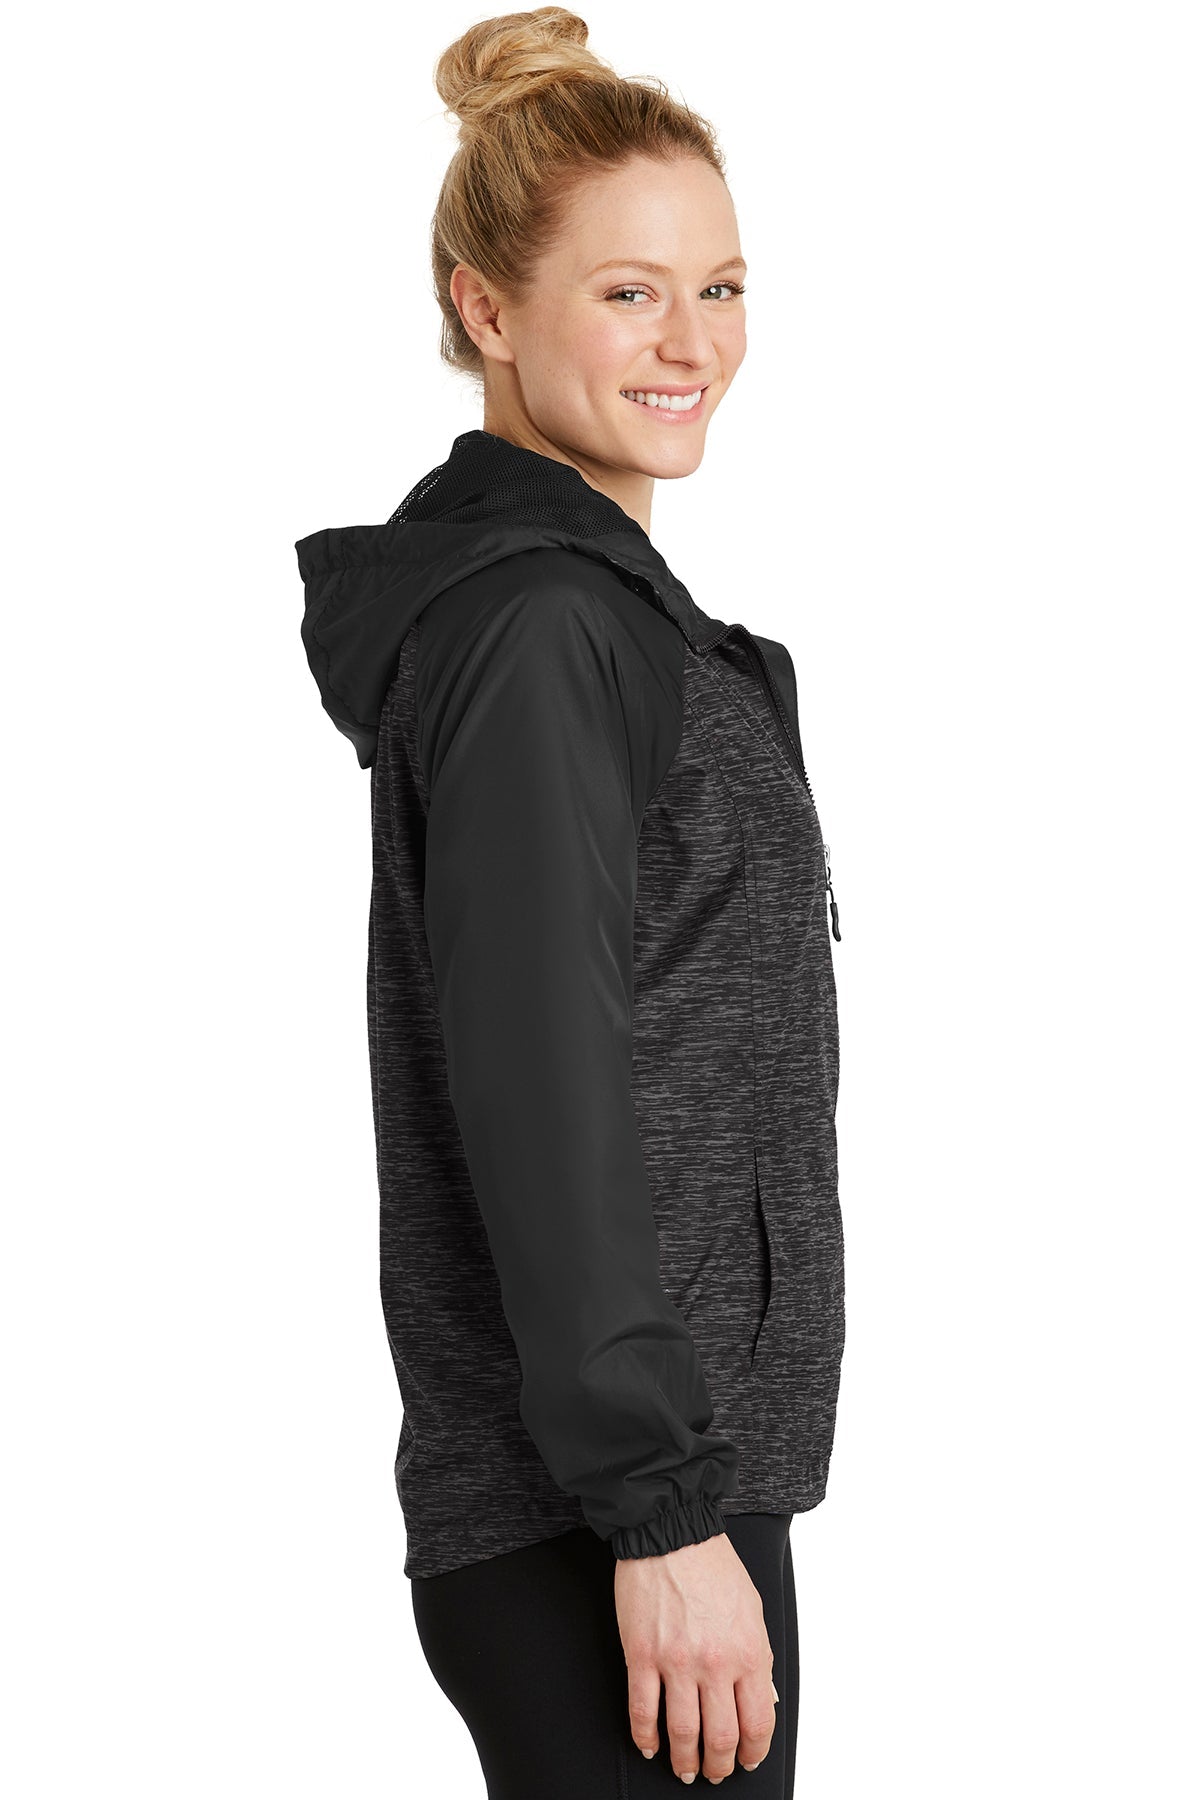 sport-tek_lst40 _black heather/ black_company_logo_jackets